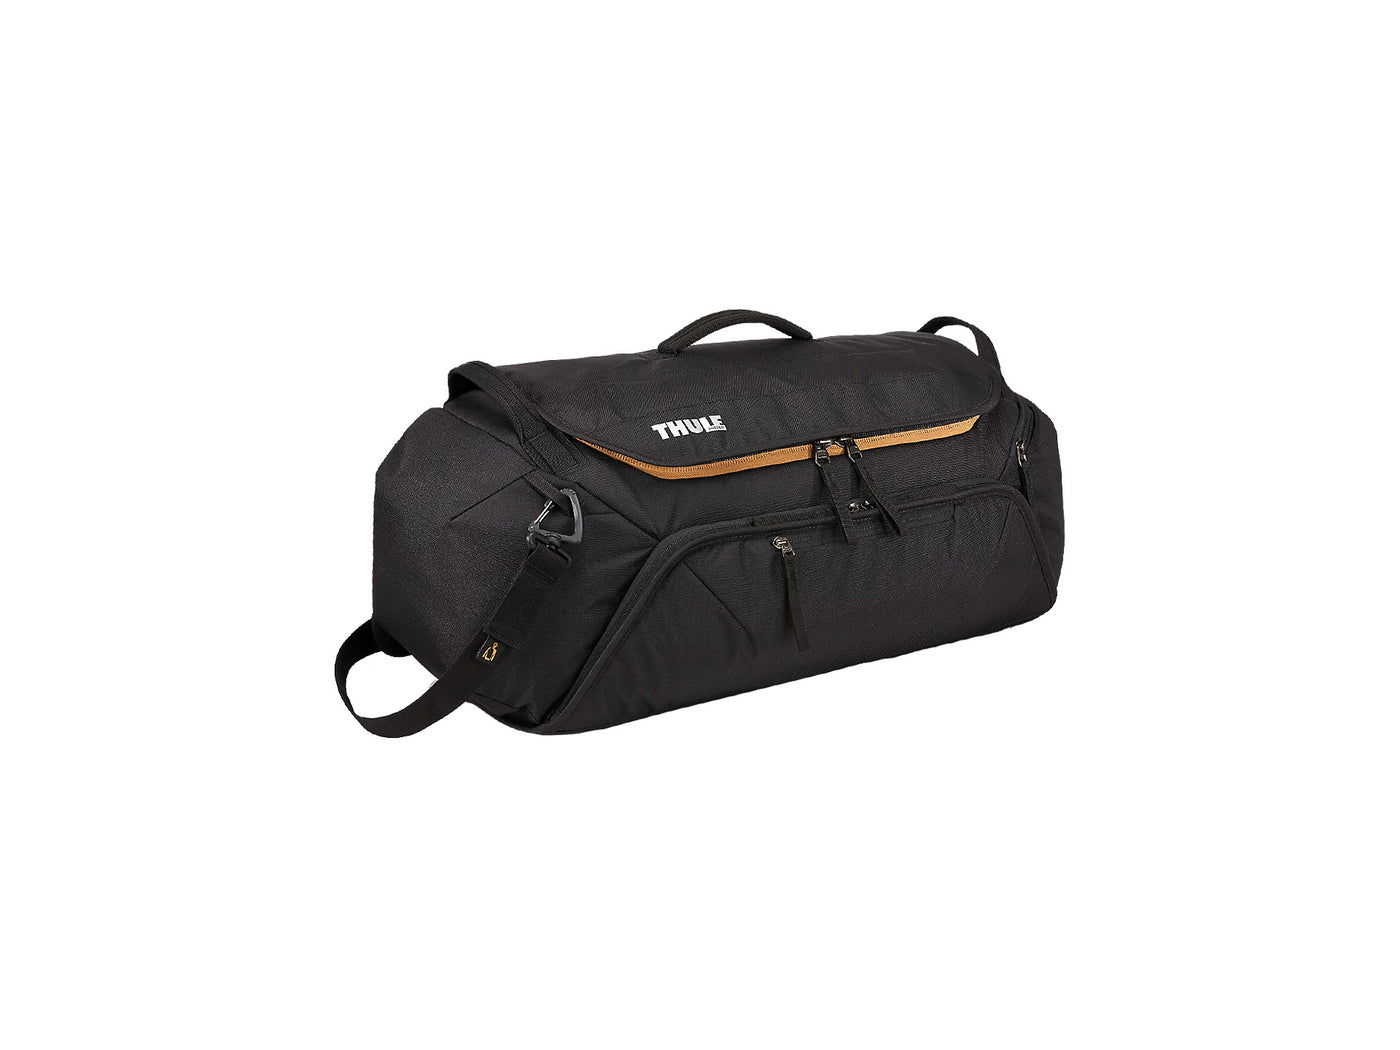 Thule RoundTrip Bike Gear Locker Travel Carry Bag / Cycling Duffle Bag (Black)